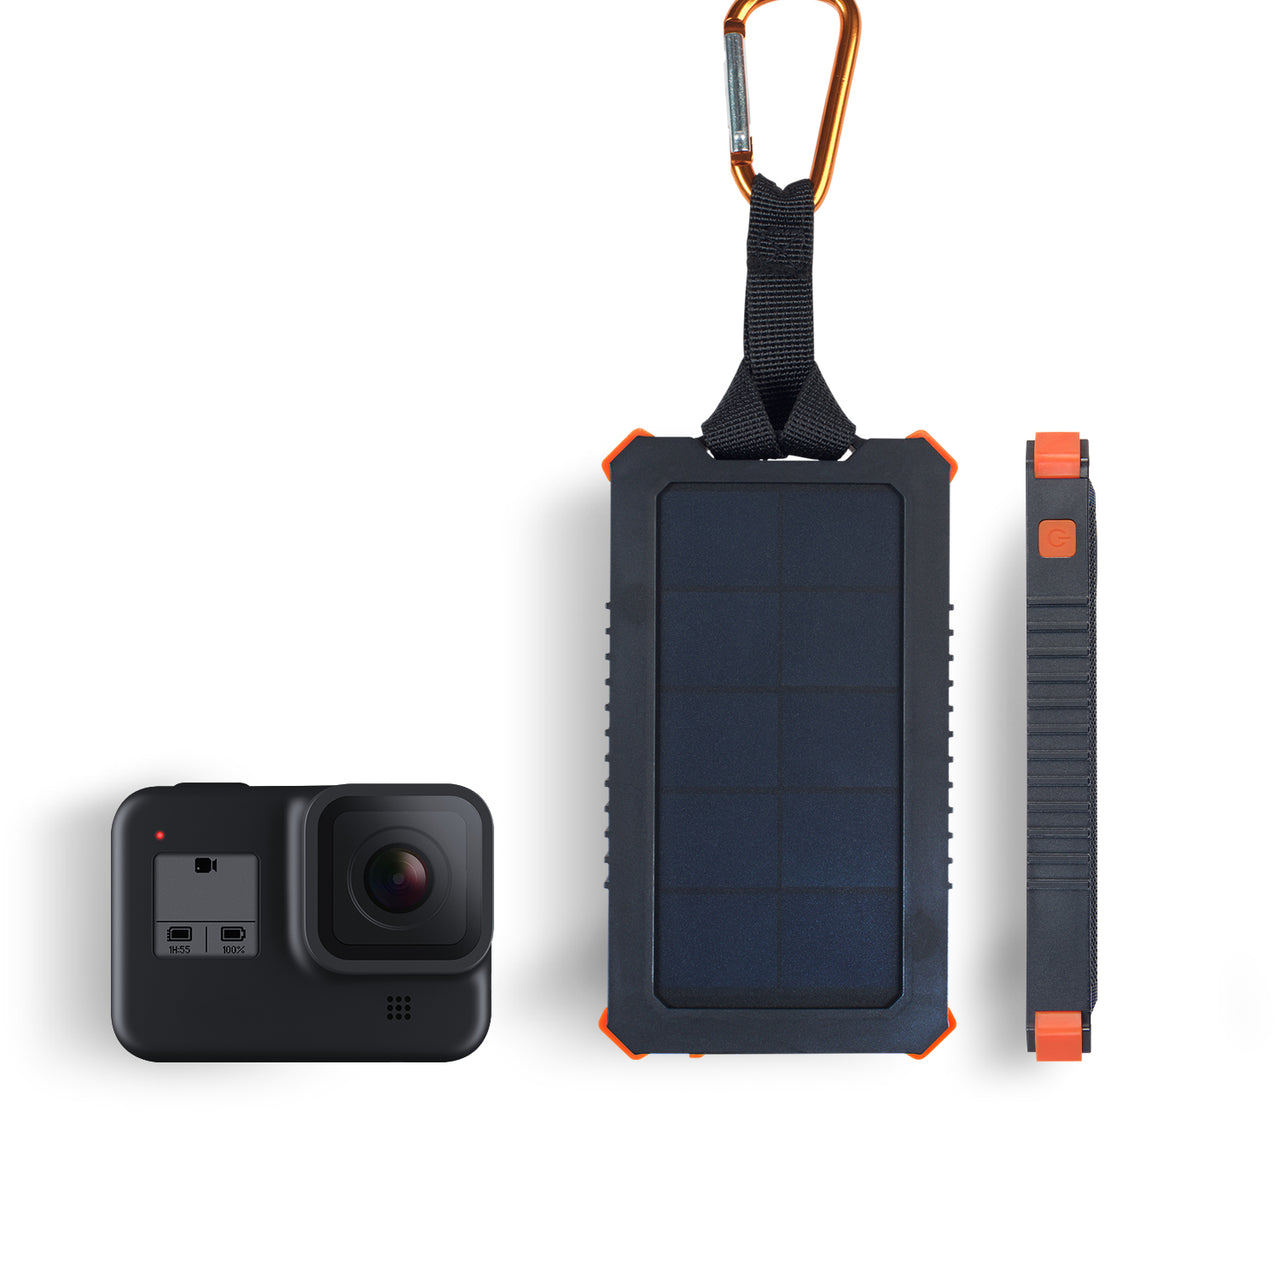 Xtreme Solar Powerbank Ladegeräte - 5000 mAh - Schwarz/Orange